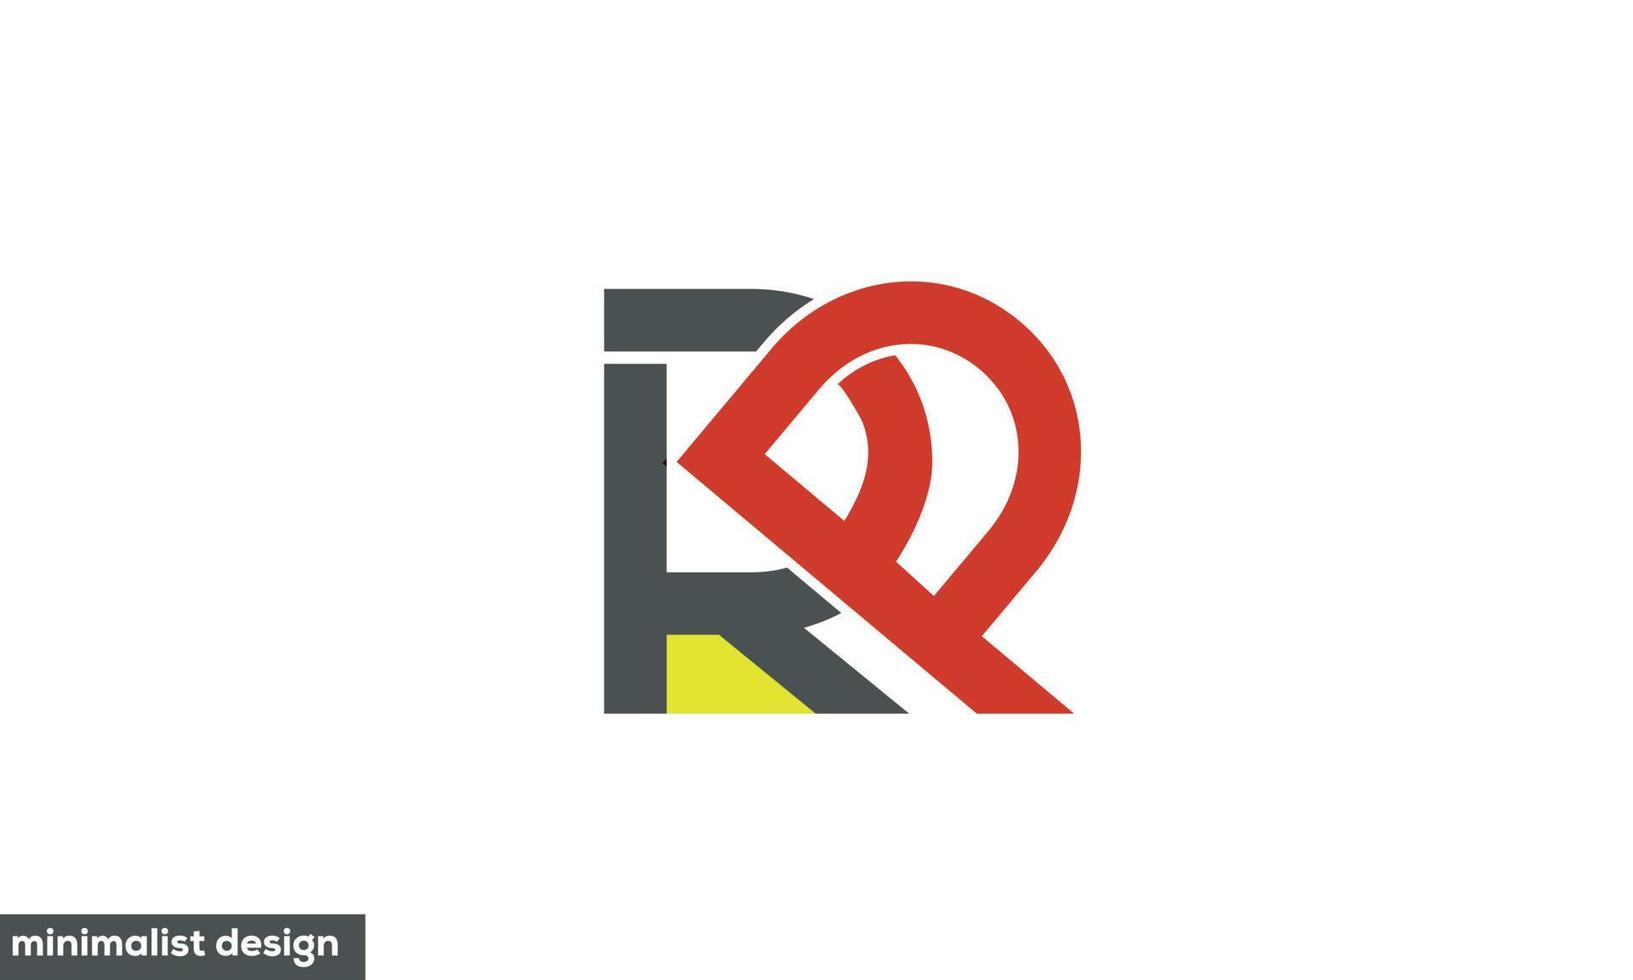 letras do alfabeto iniciais monograma logotipo rp, pr, r e p vetor